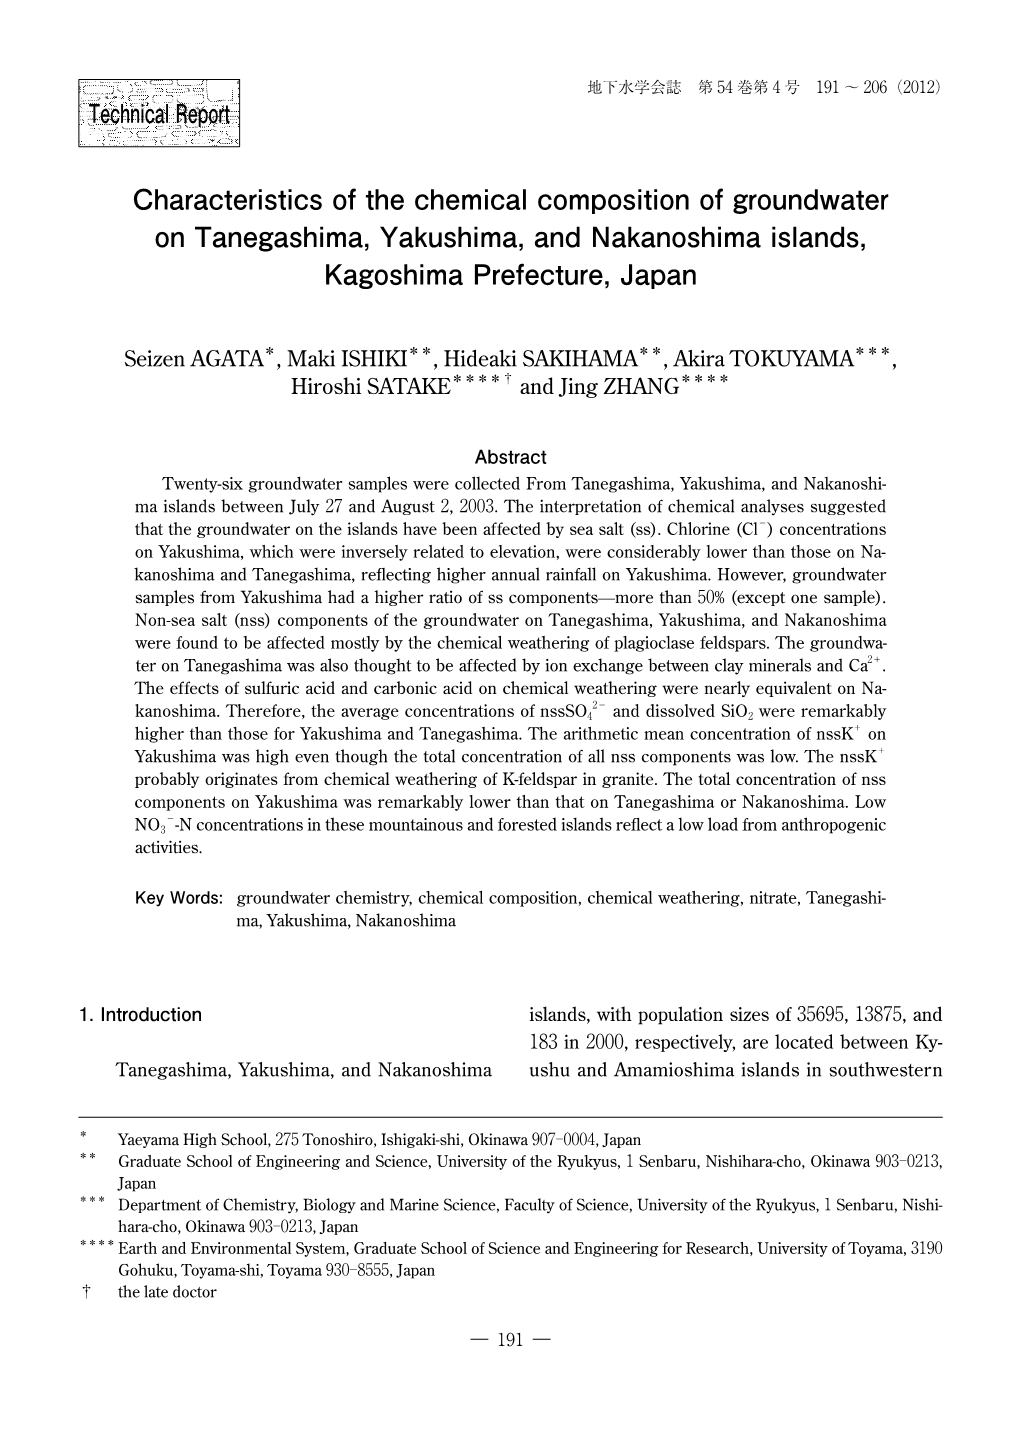 Characteristics of the Chemical Composition of Groundwater on Tanegashima, Yakushima, and Nakanoshima Islands, Kagoshima Prefecture, Japan